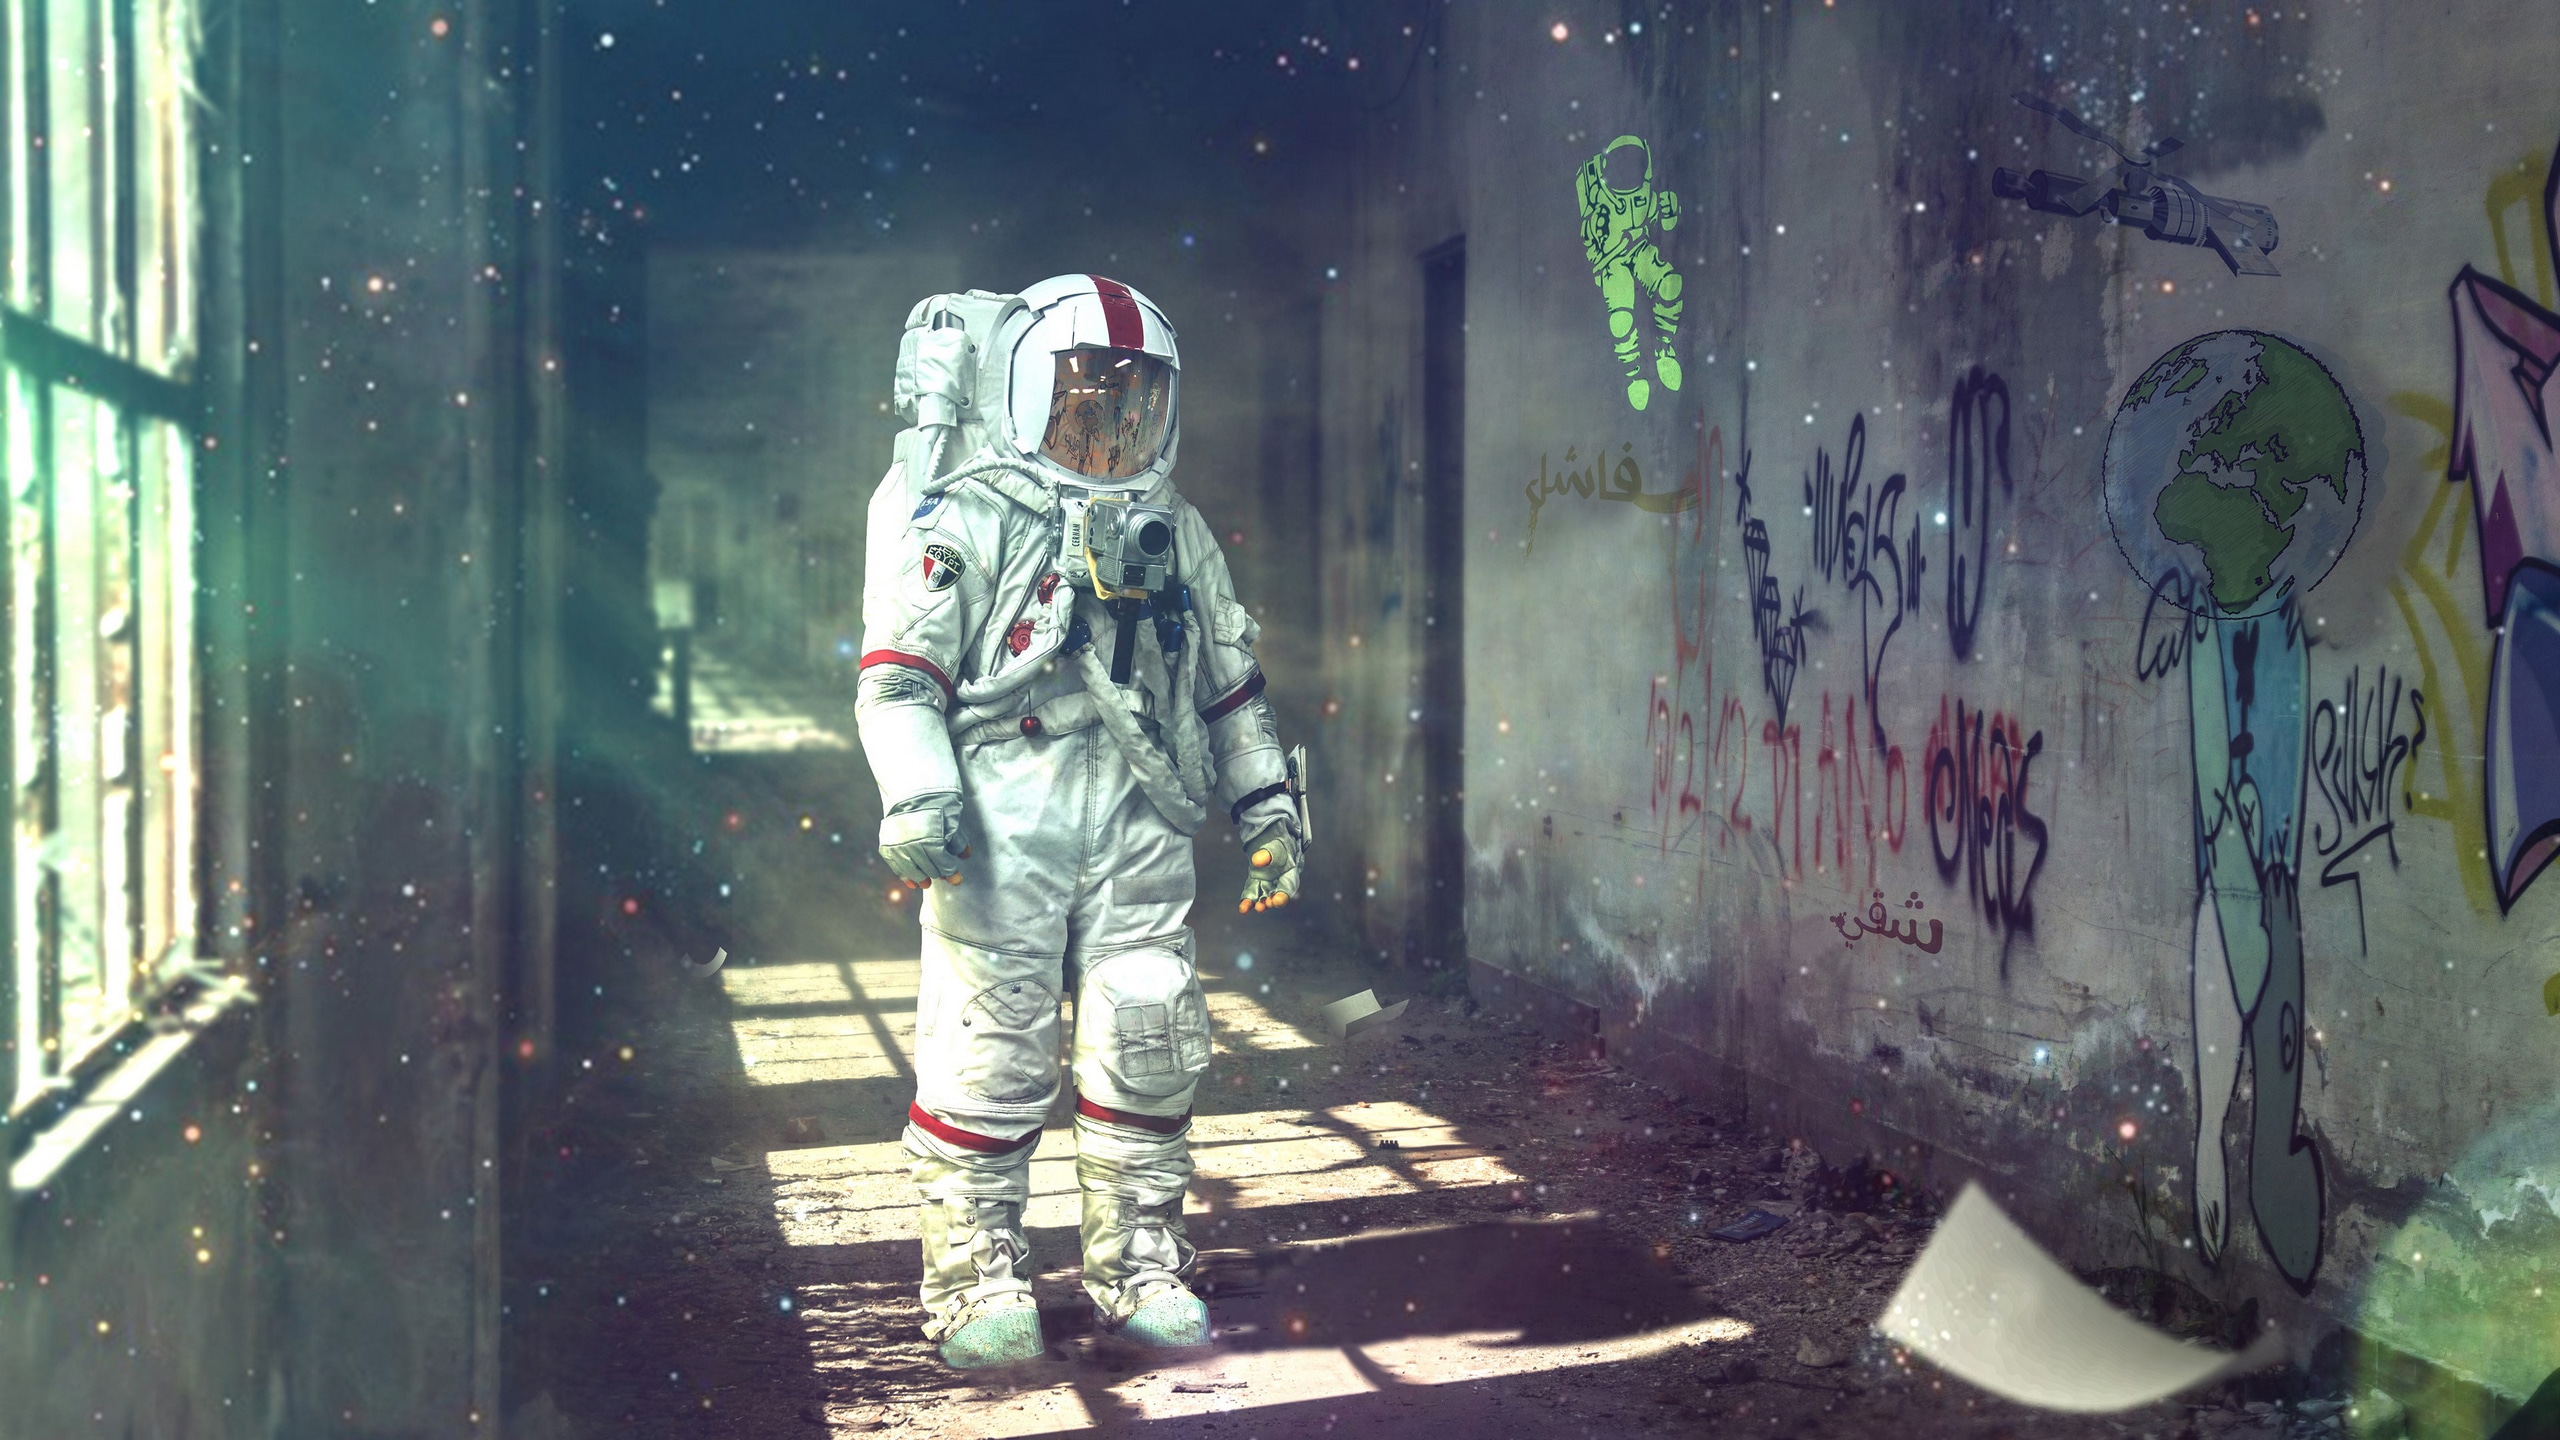 Astronaut Creative Artwork Wallpapers